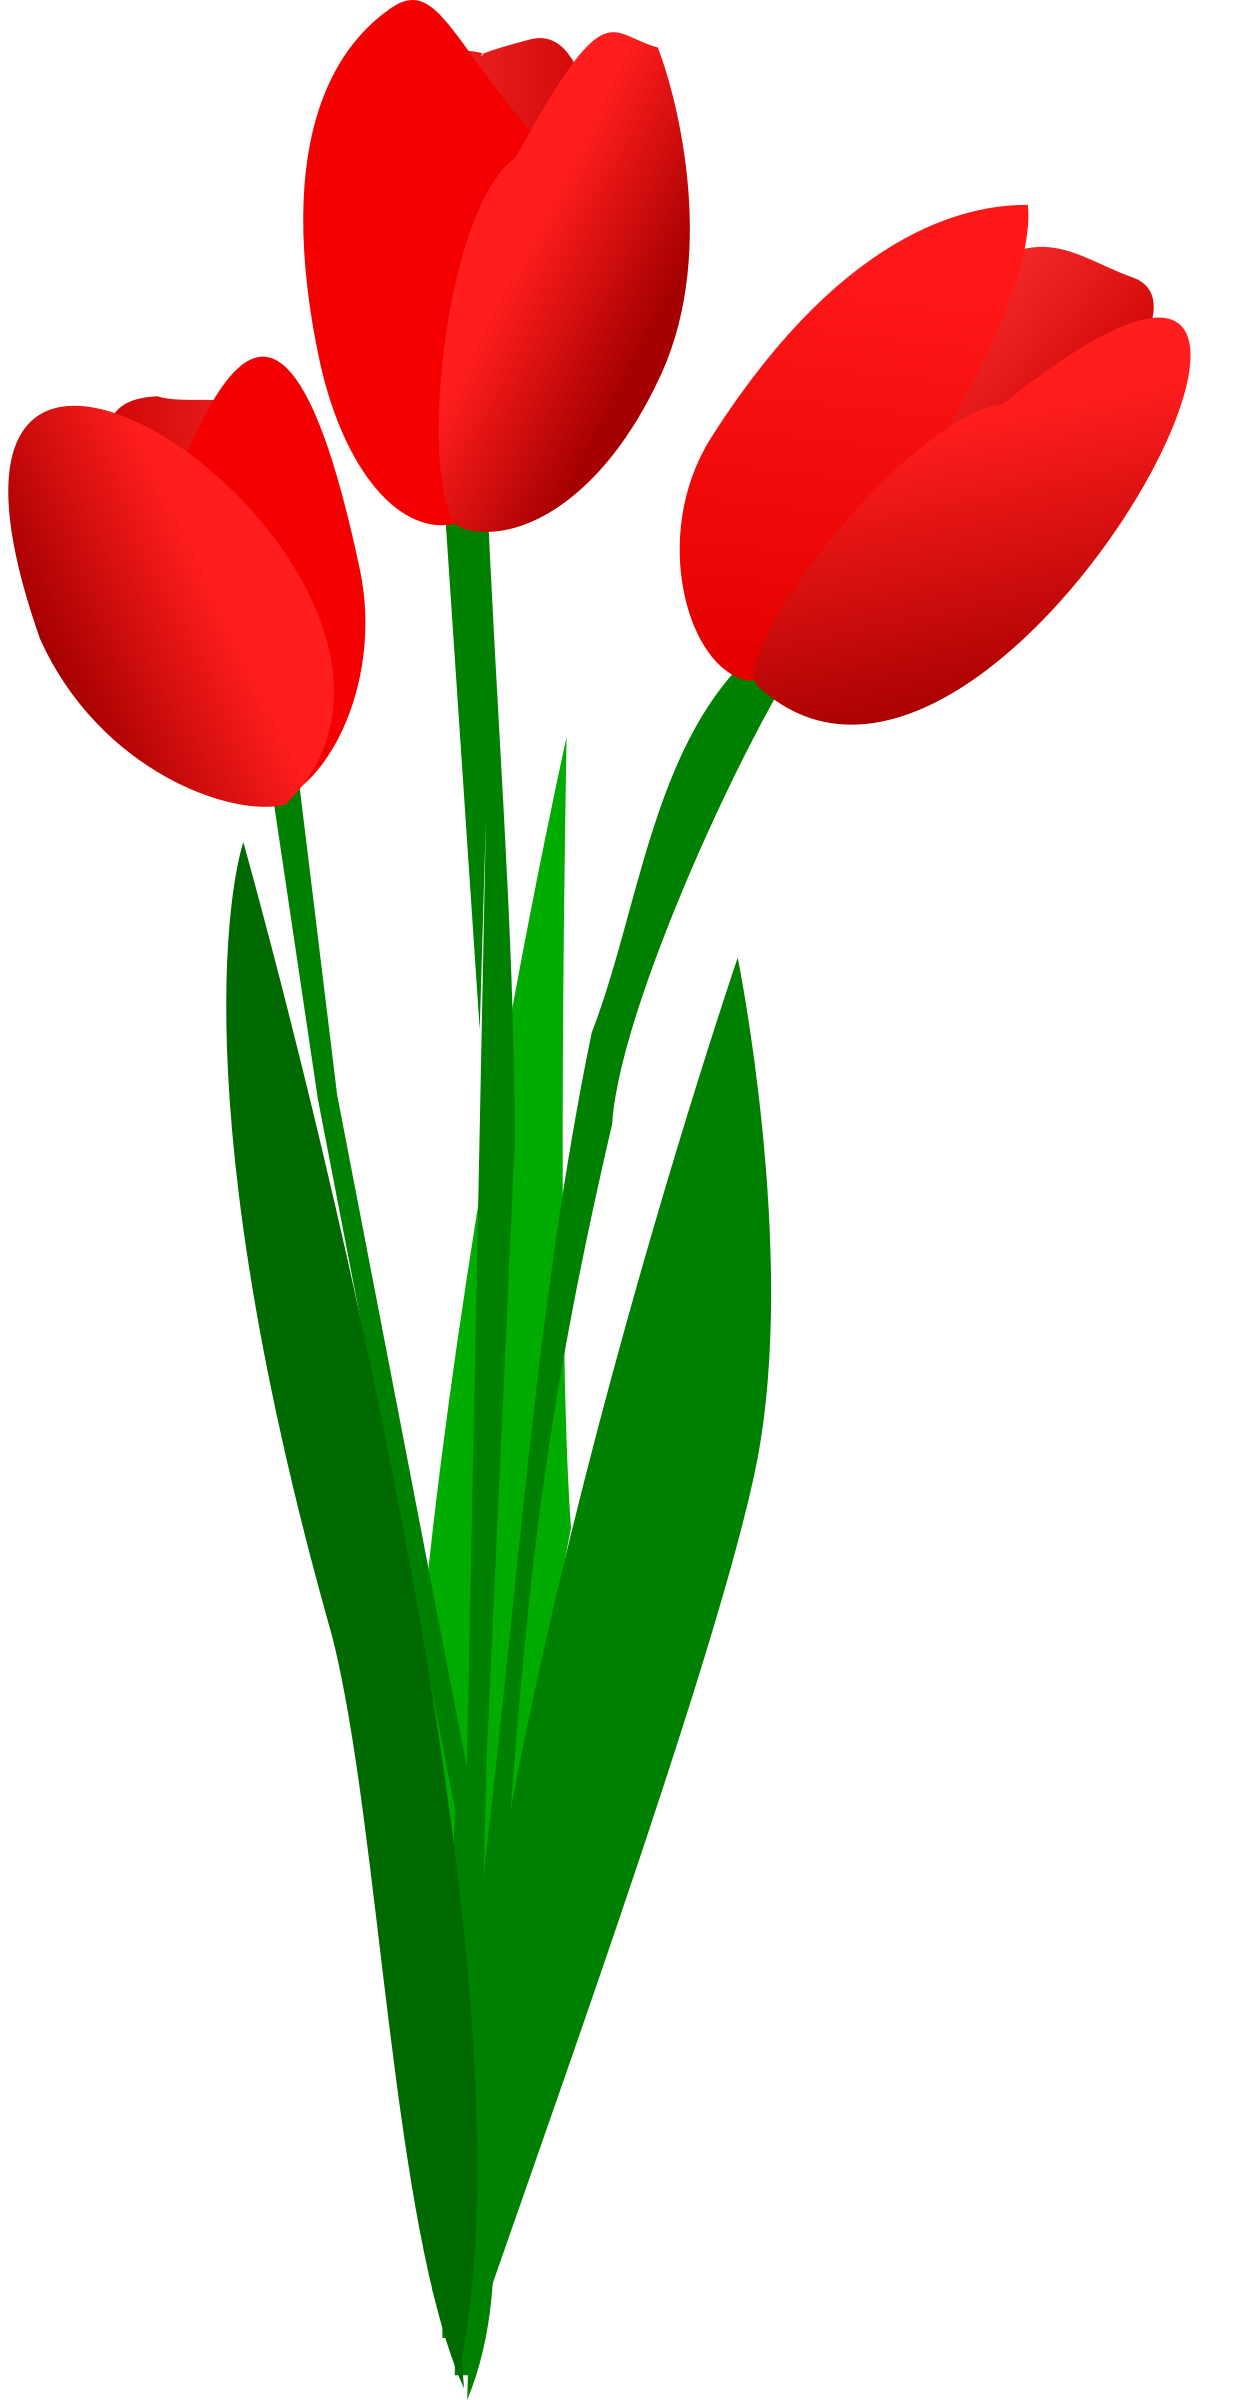 Three red tulips hoa. Clipart spring tulip